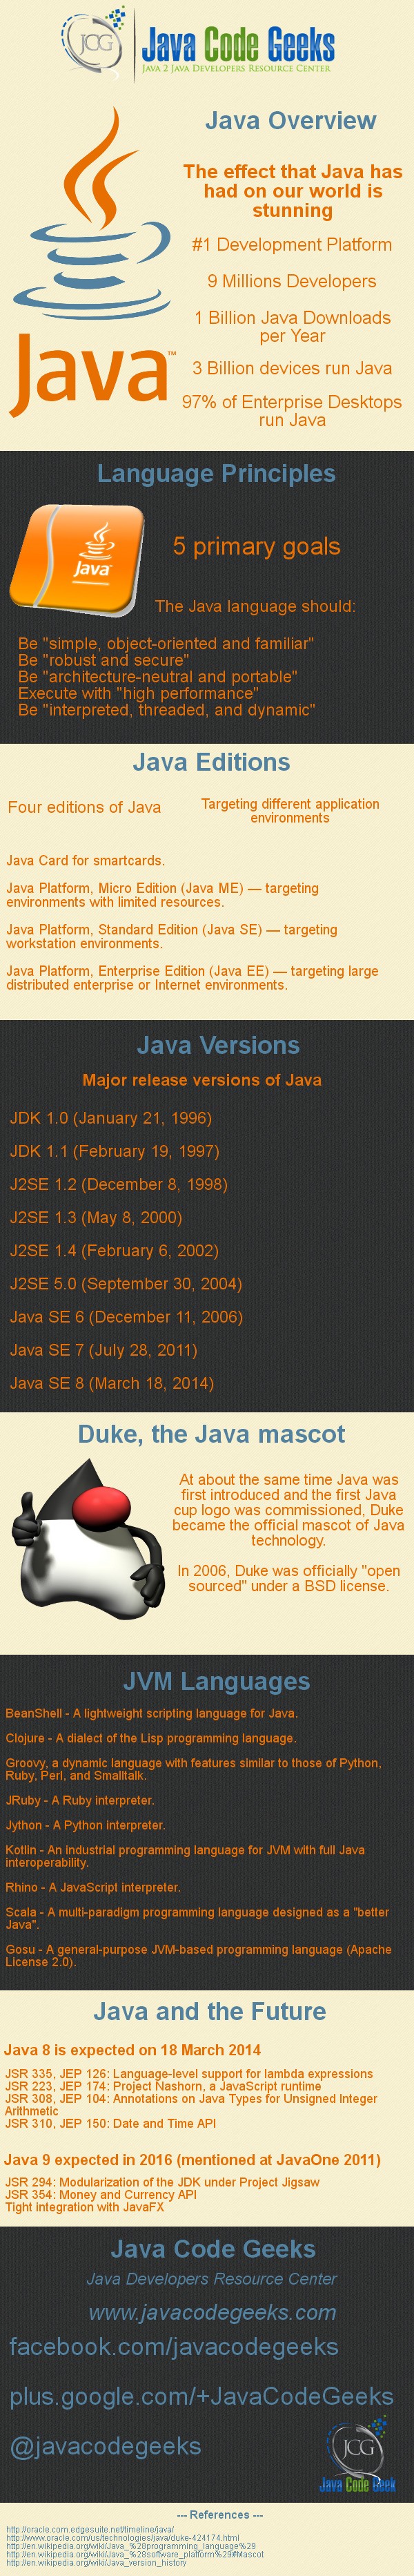 jcg-java-history-facts